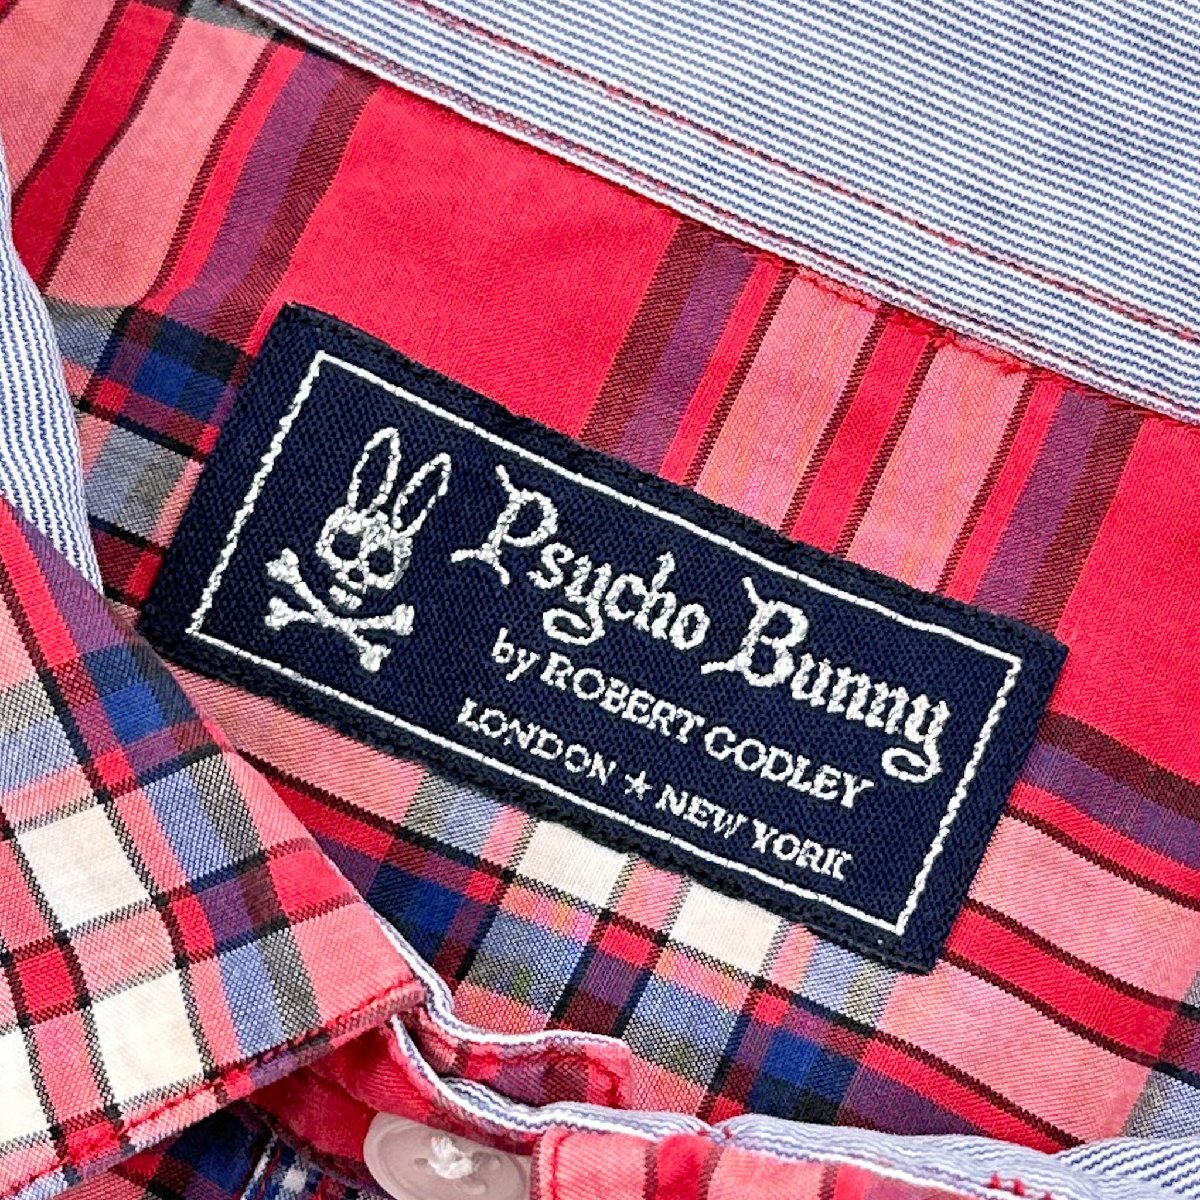 Psycho Bunny サイコバニー スカル刺繍 チェック柄 長袖シャツ サイズ L /メンズ/ゴルフ_画像5